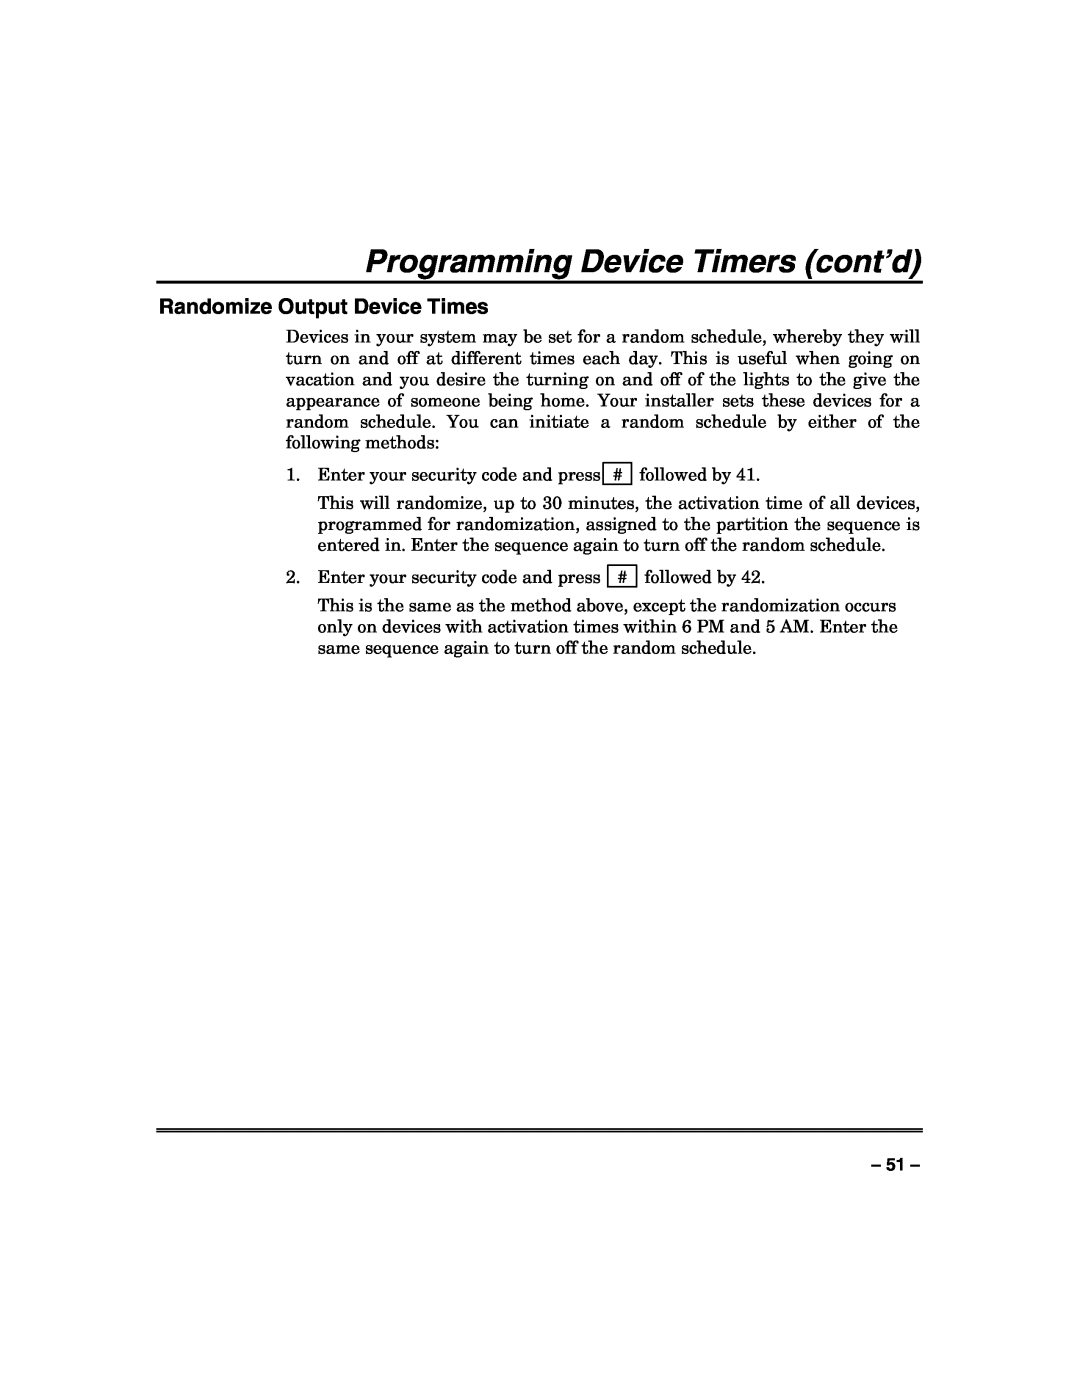 Honeywell VISTA-128FBP, VISTA-250FBP manual Randomize Output Device Times, Programming Device Timers cont’d 